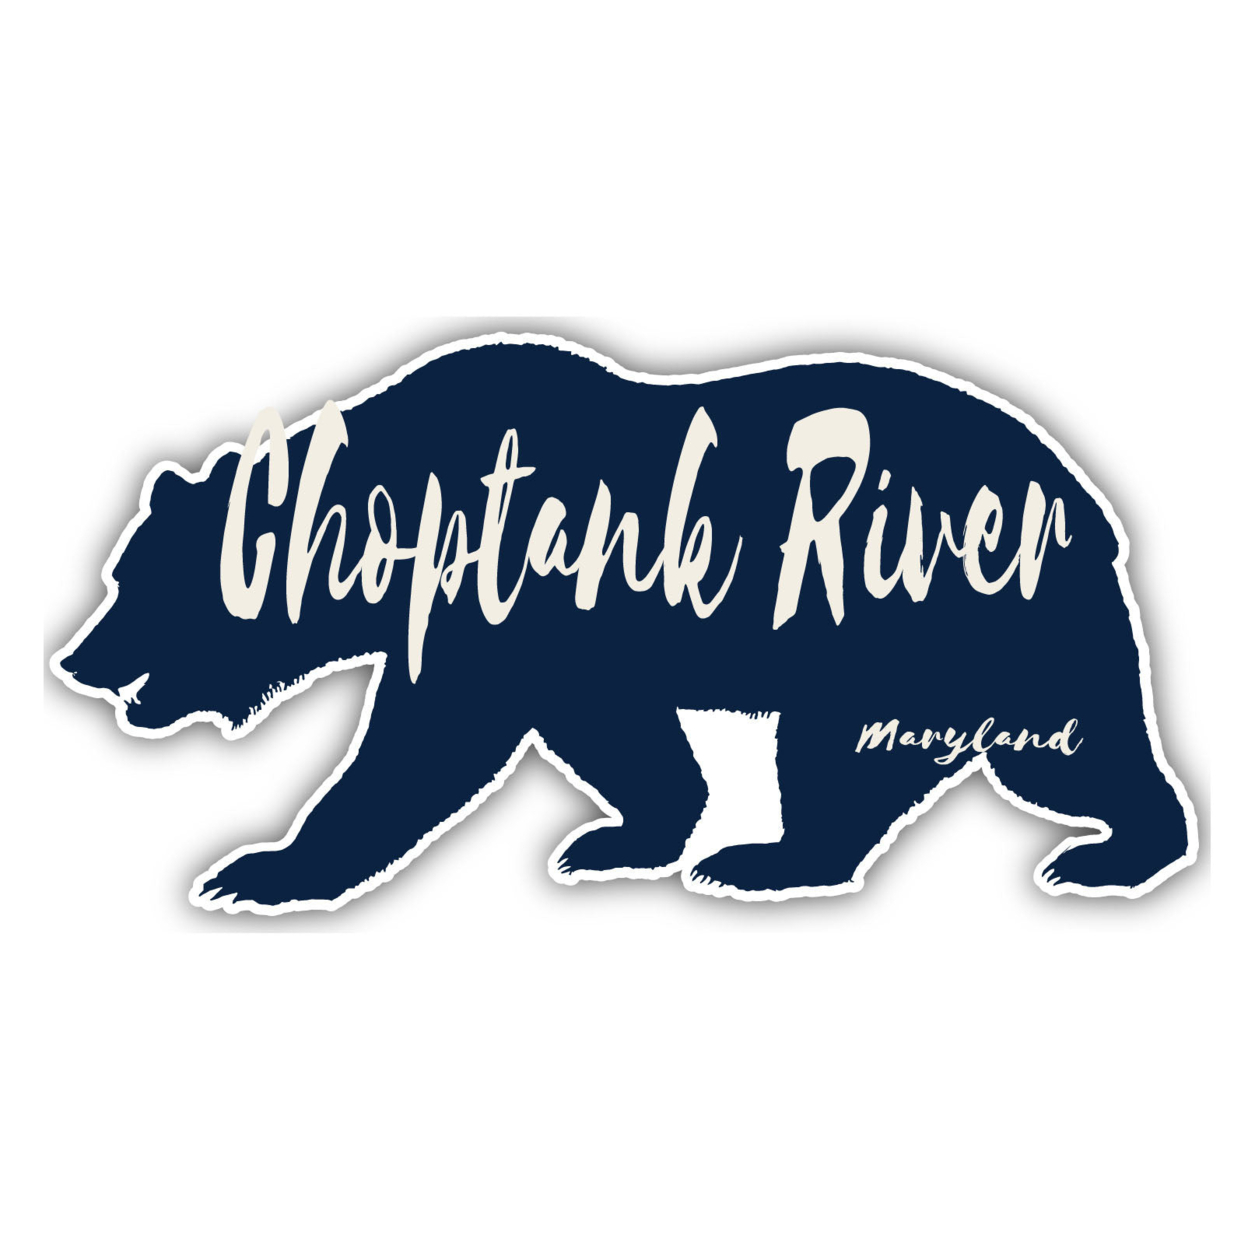 Choptank River Maryland Souvenir Decorative Stickers (Choose Theme And Size) - Single Unit, 12-Inch, Bear